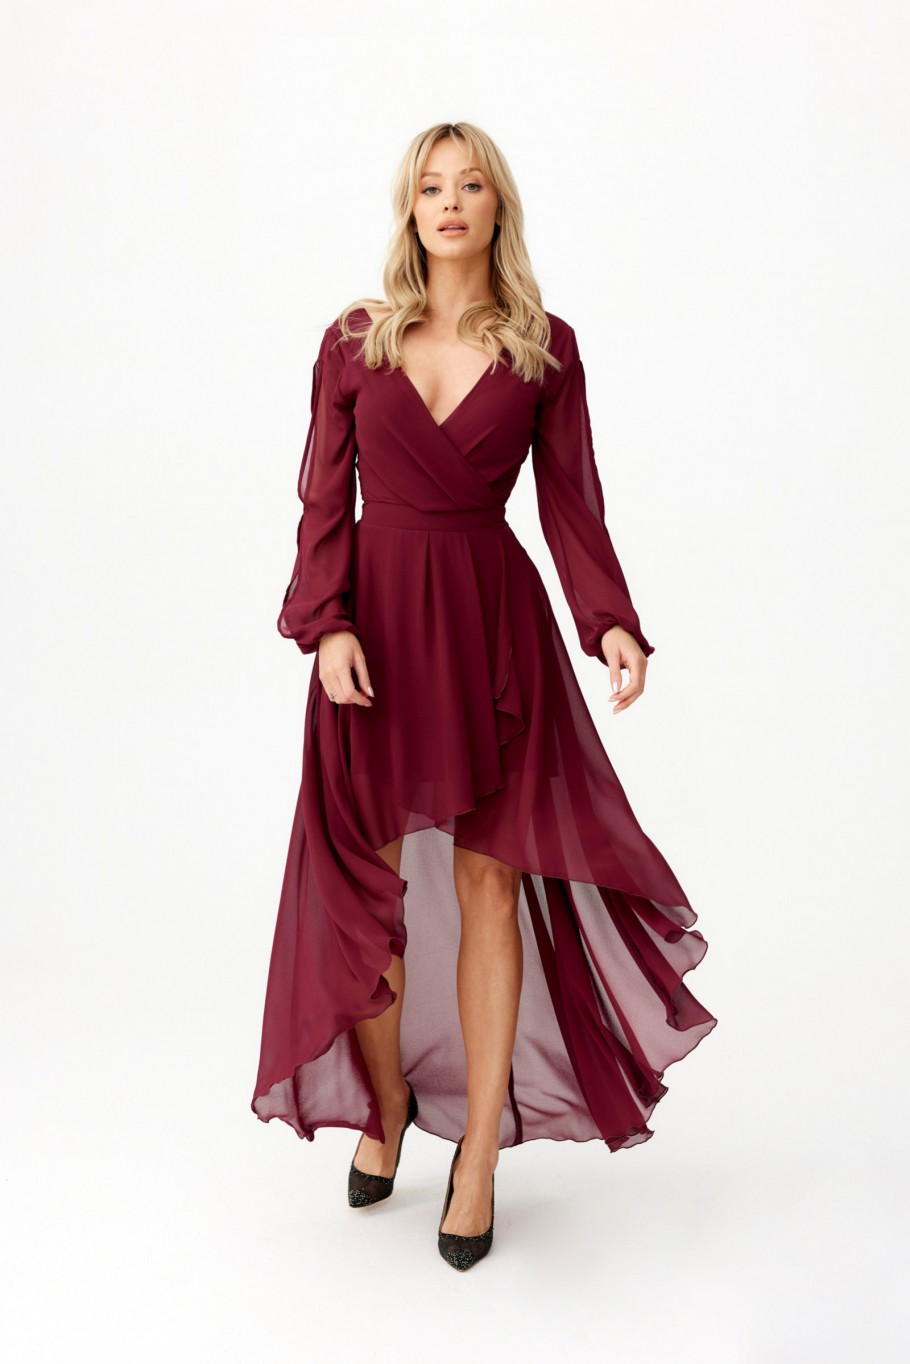 Roco Woman's Dress SUK0428